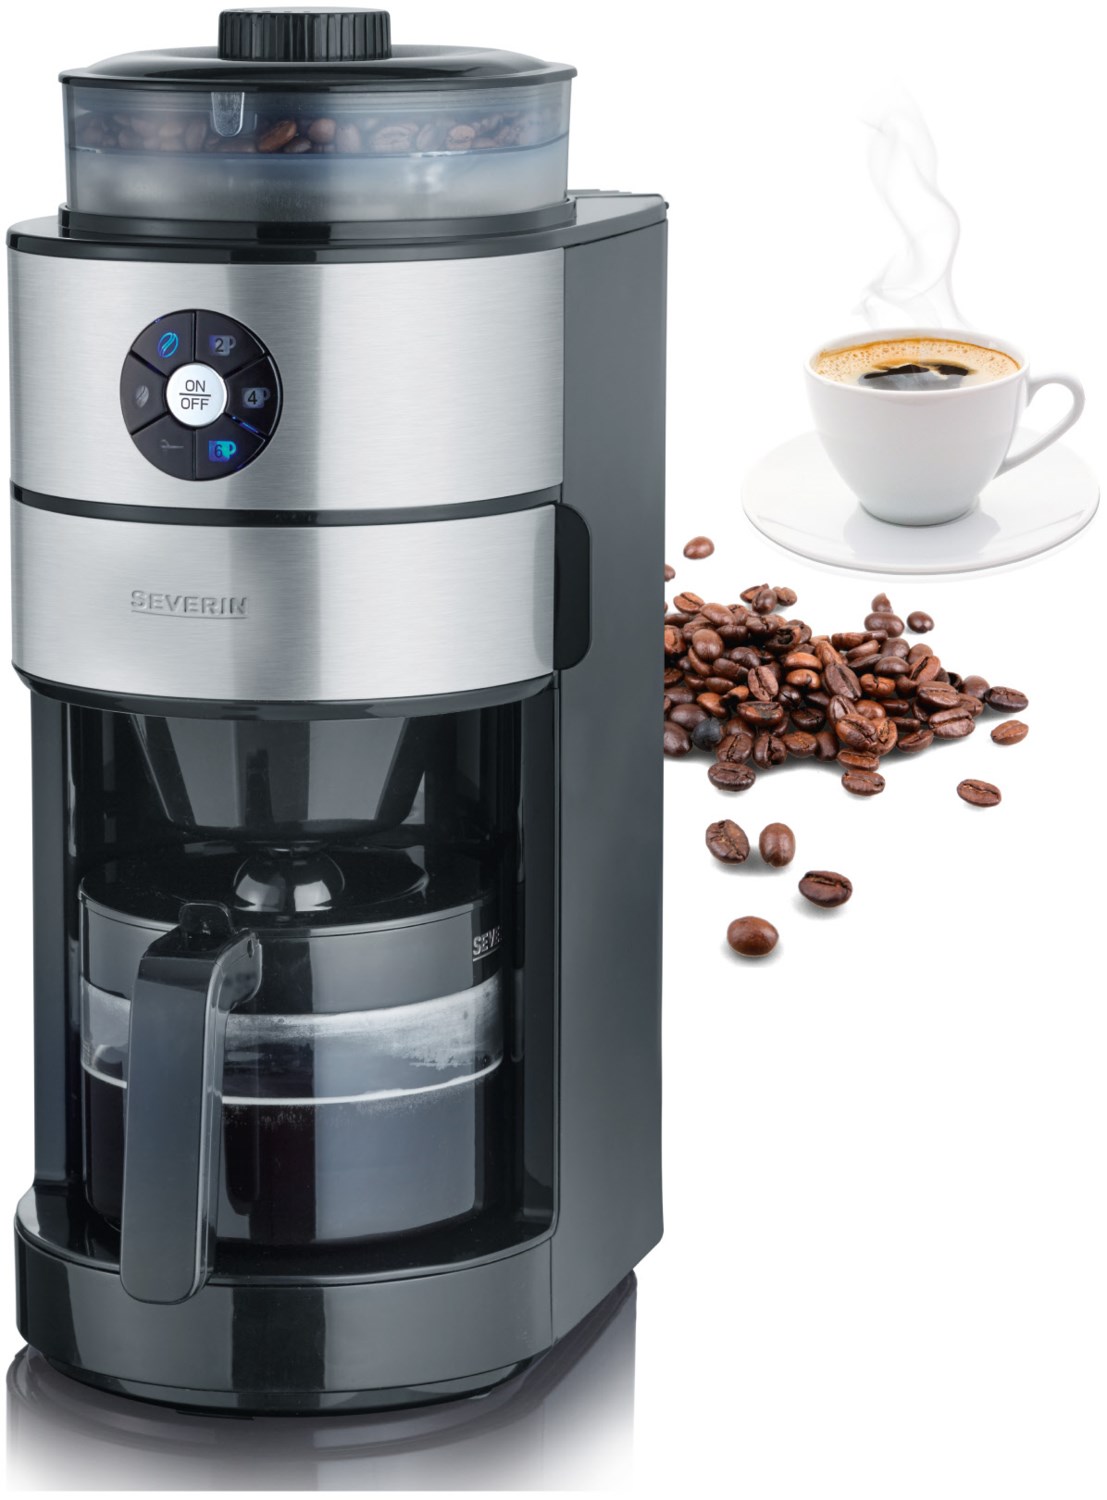 Severin KA4811 Kaffeeautomat mit integriertem Mahlwerk und Glaskanne